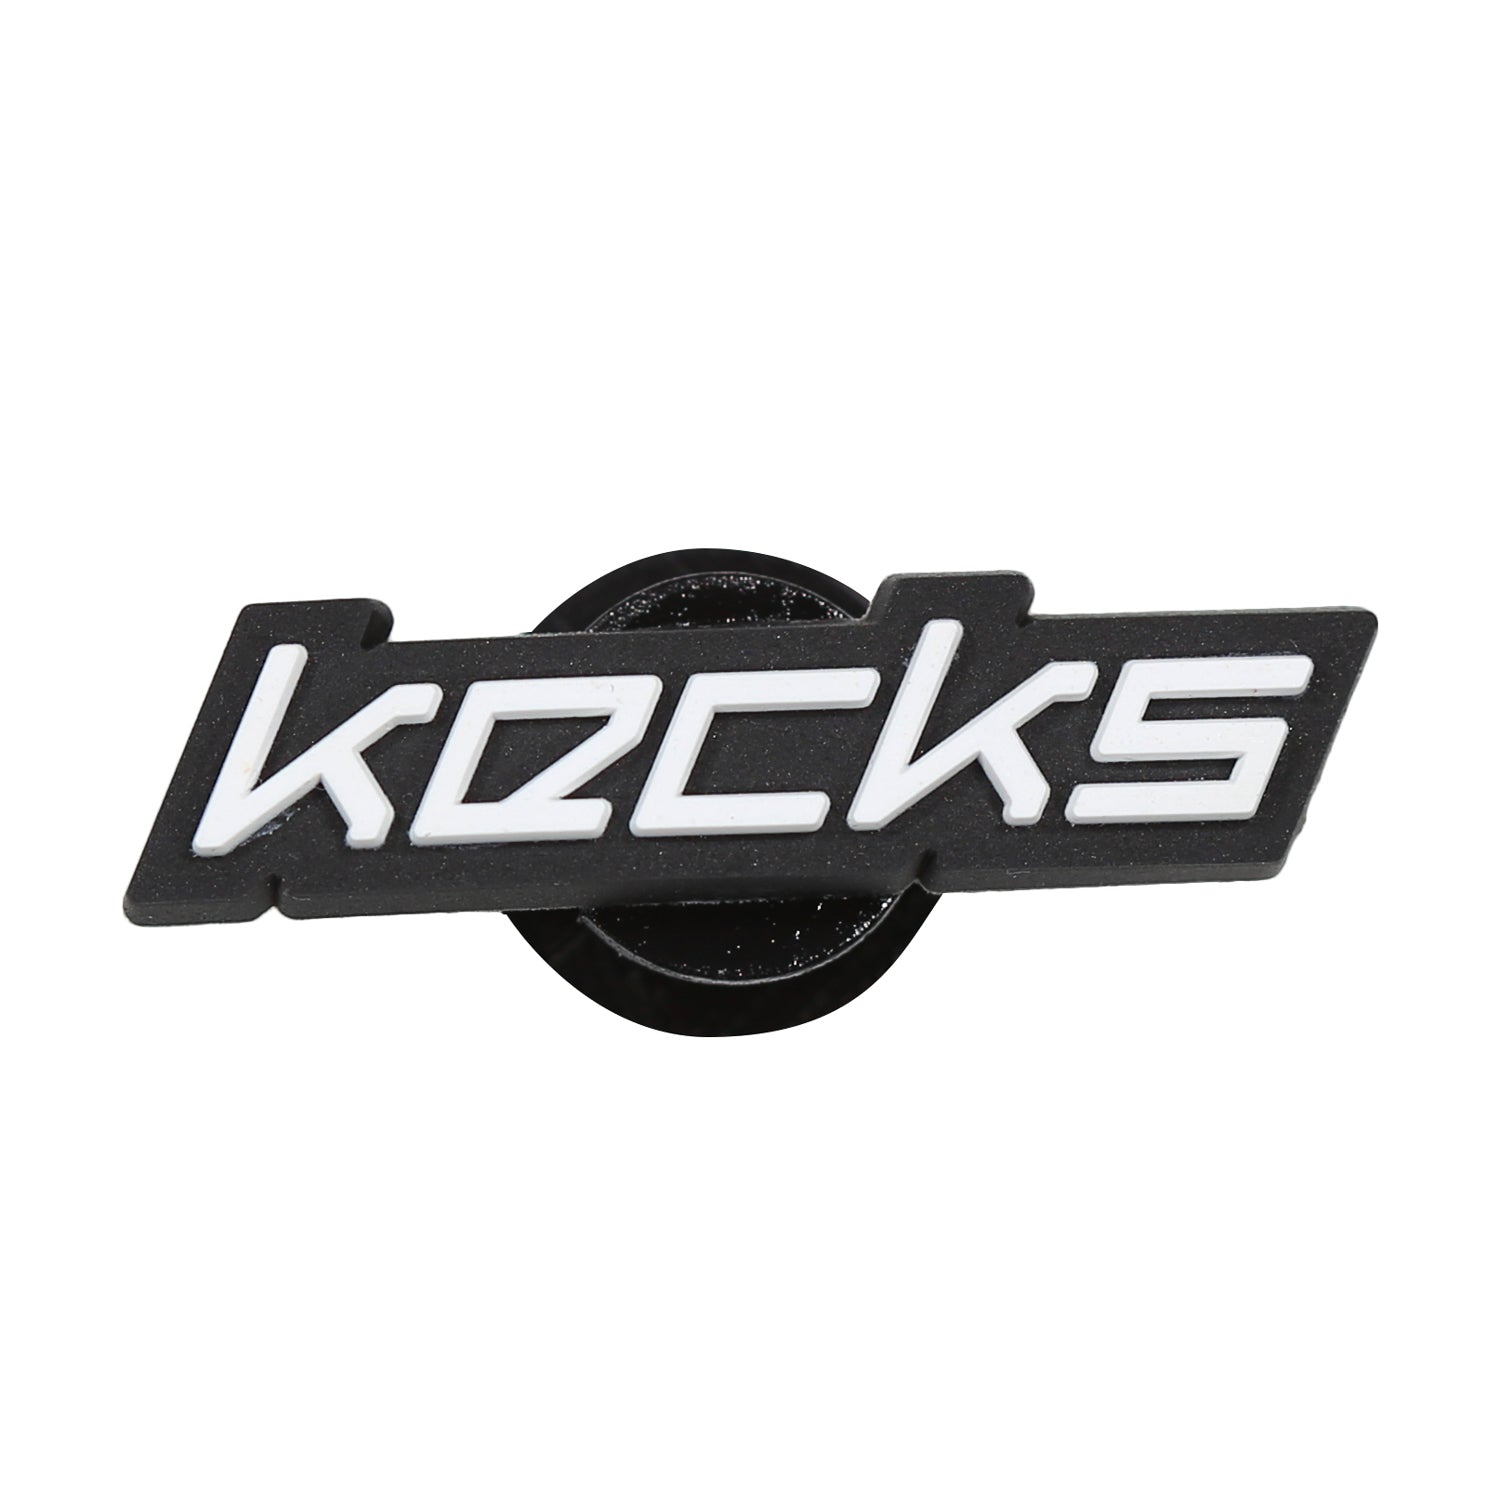 Black Slogan Charm - Kecks